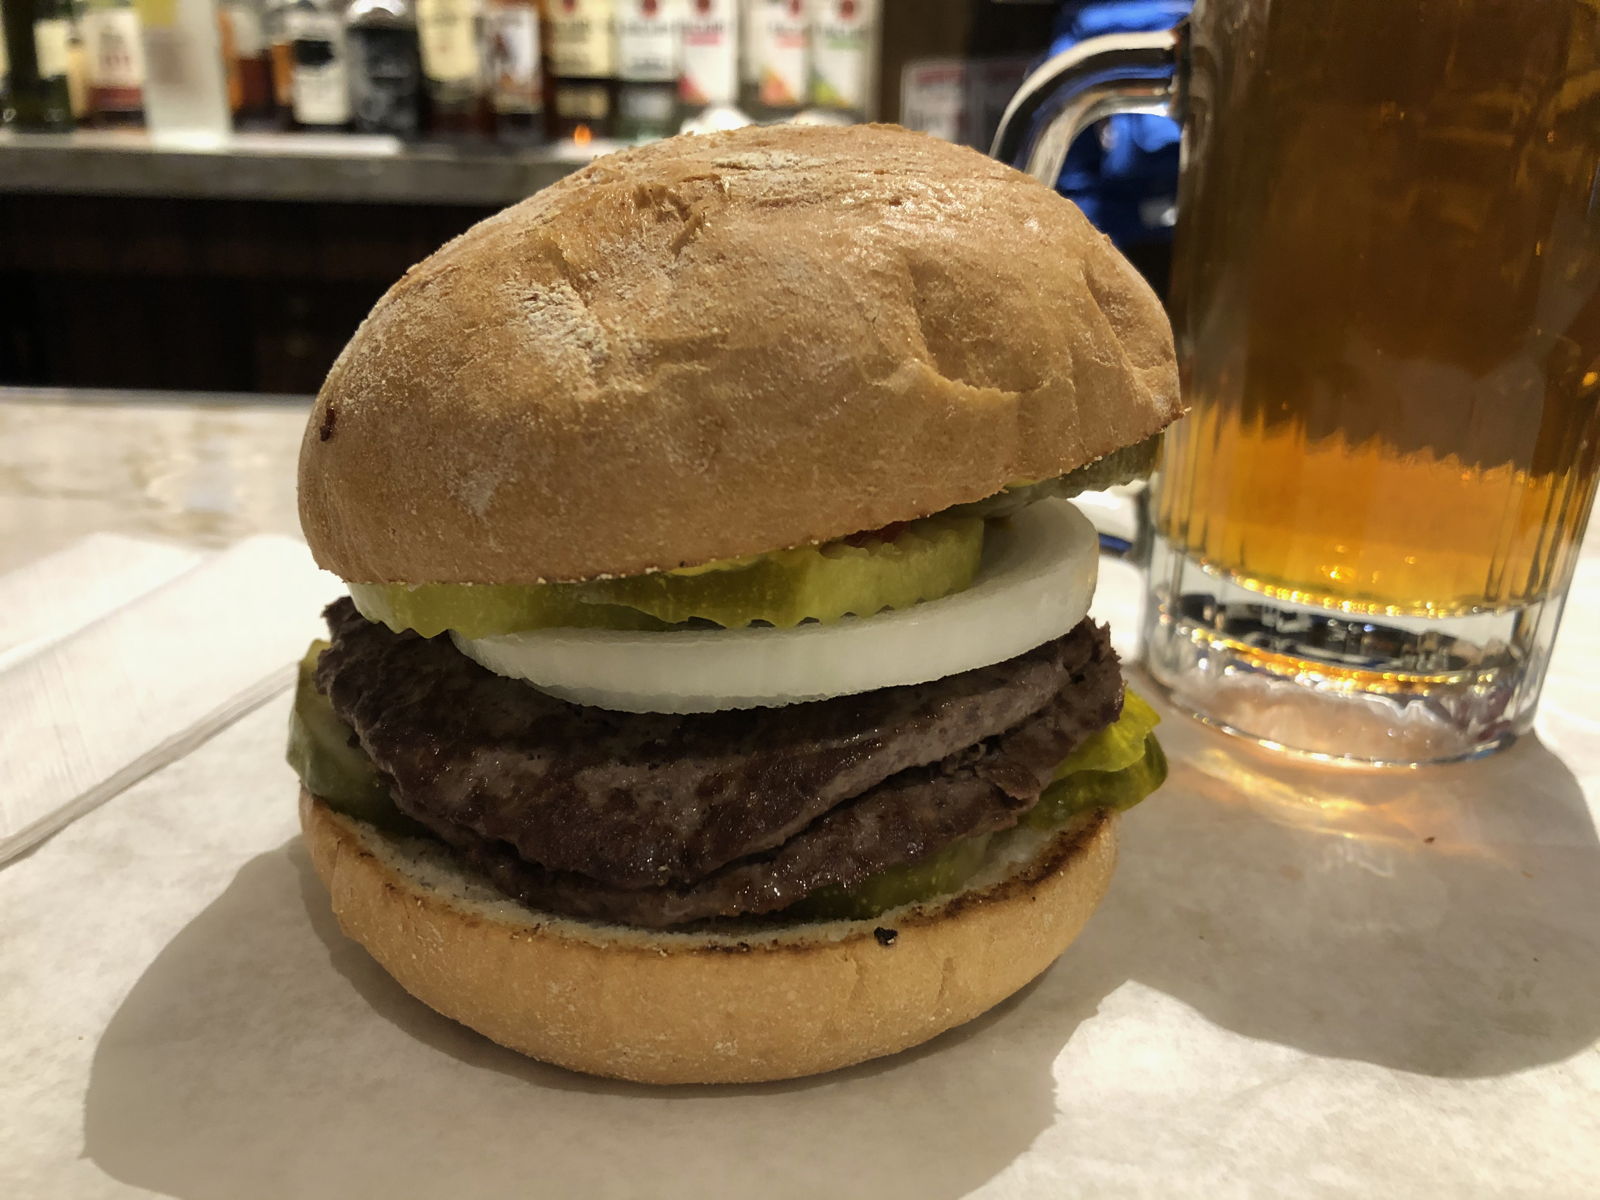 Billy Goat Tavern burger